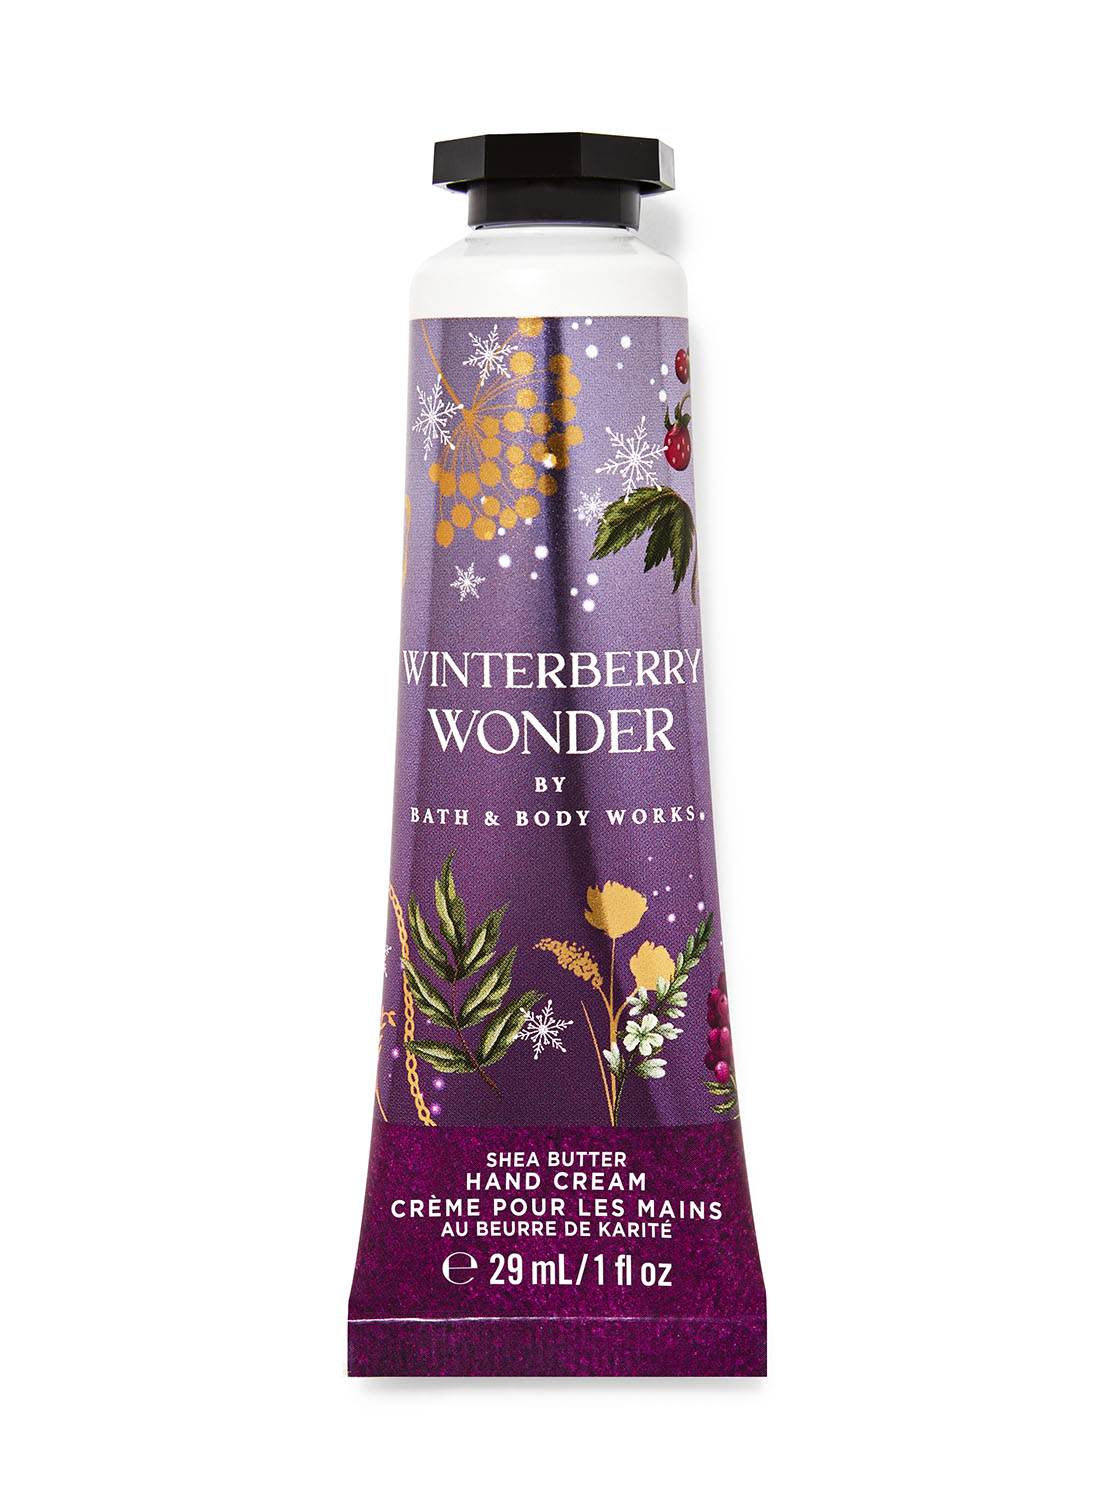 Winterberry Wonder Hand Cream | Bath and Body Works